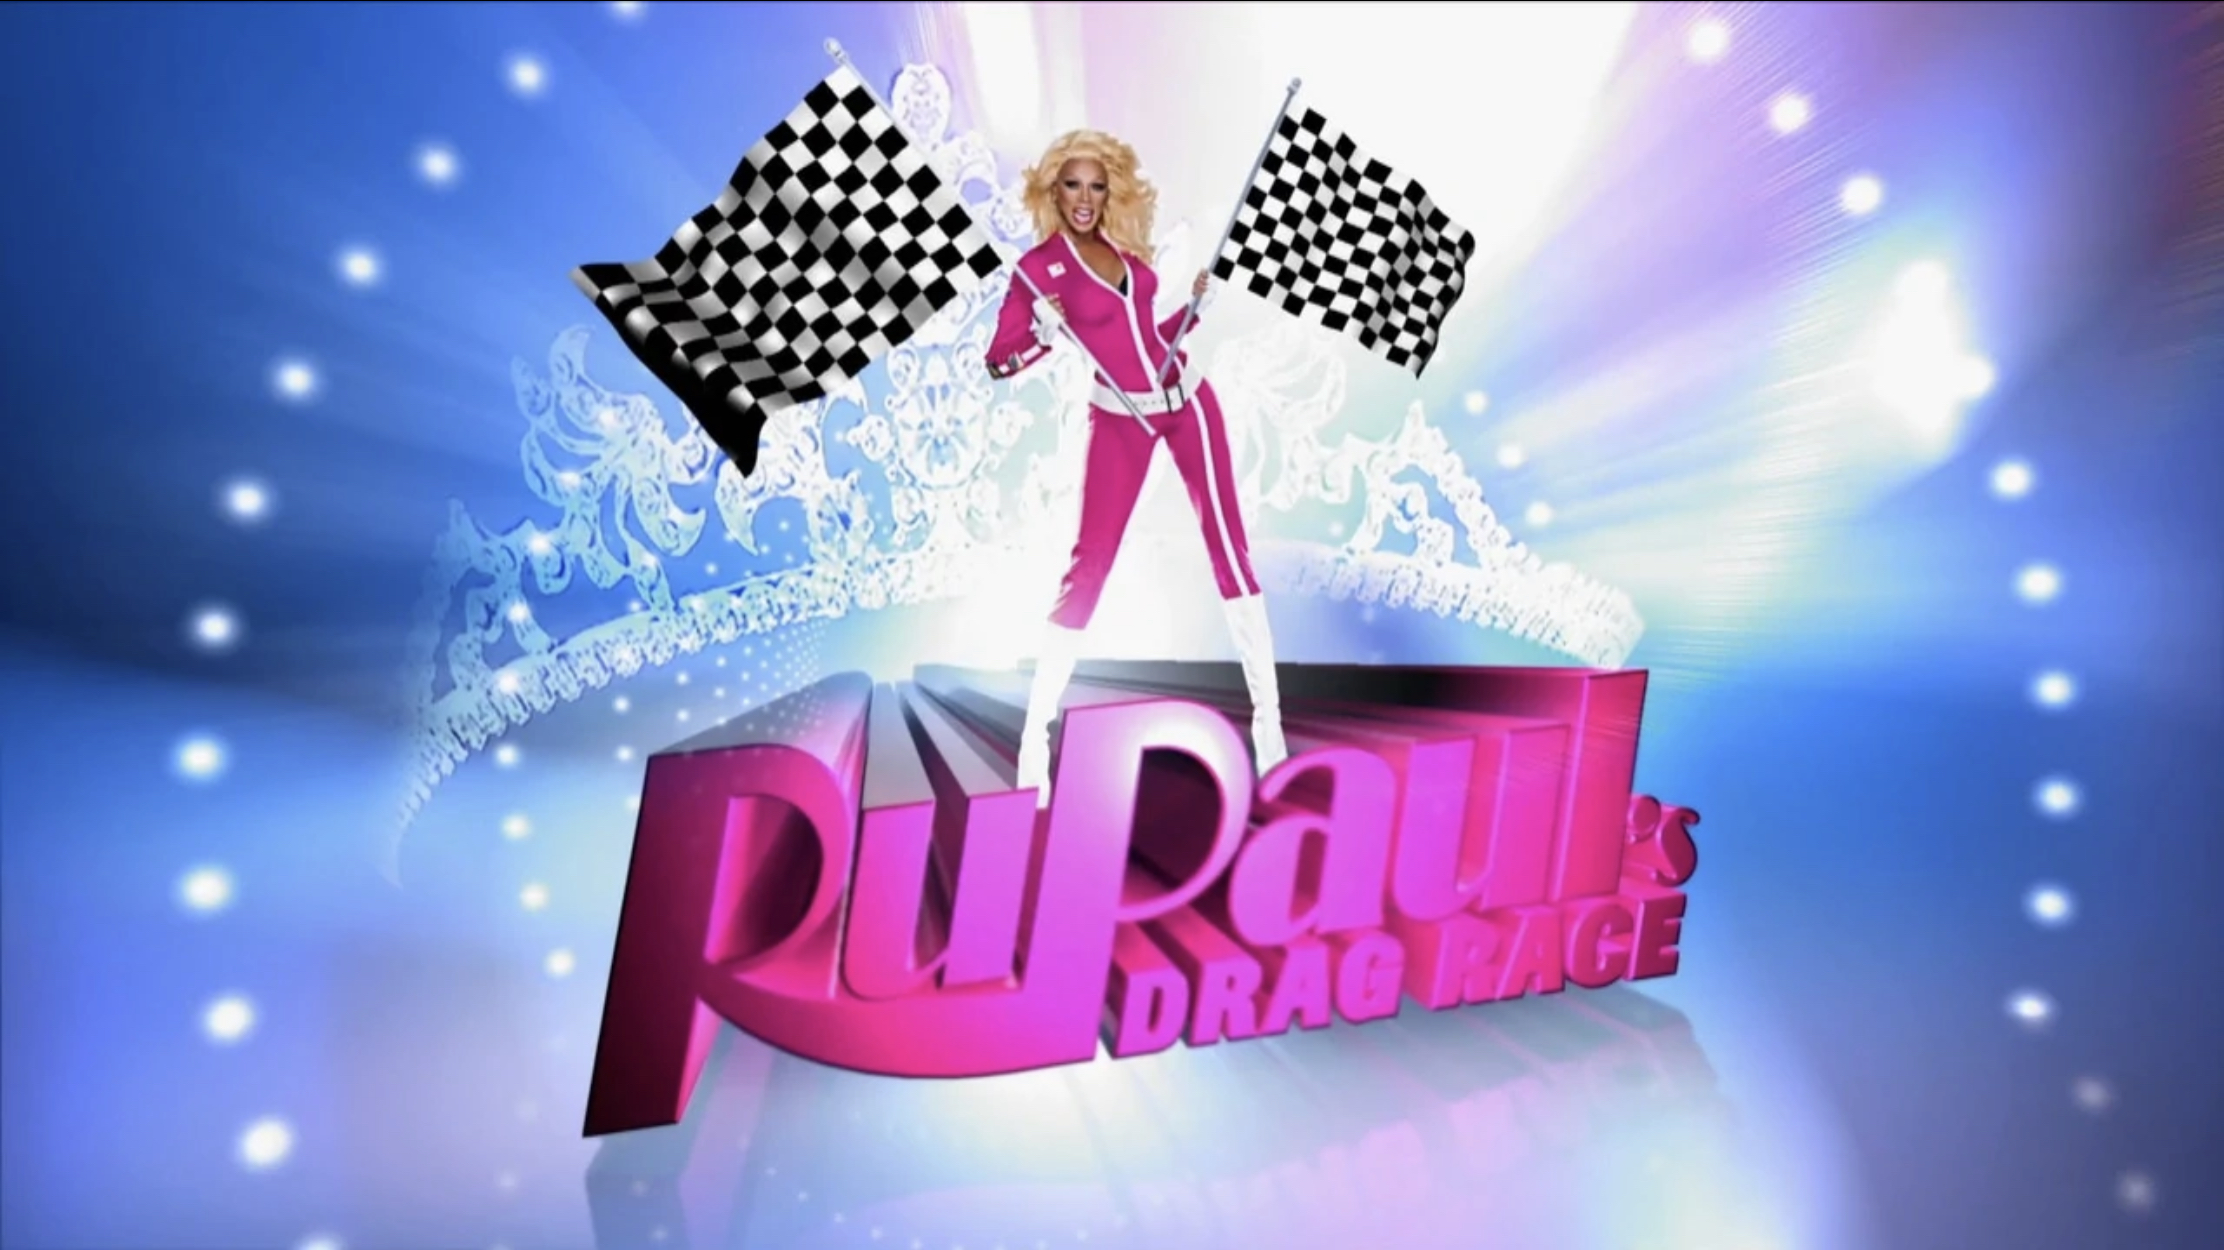 Drag Race España (Season 2), RuPaul's Drag Race Wiki